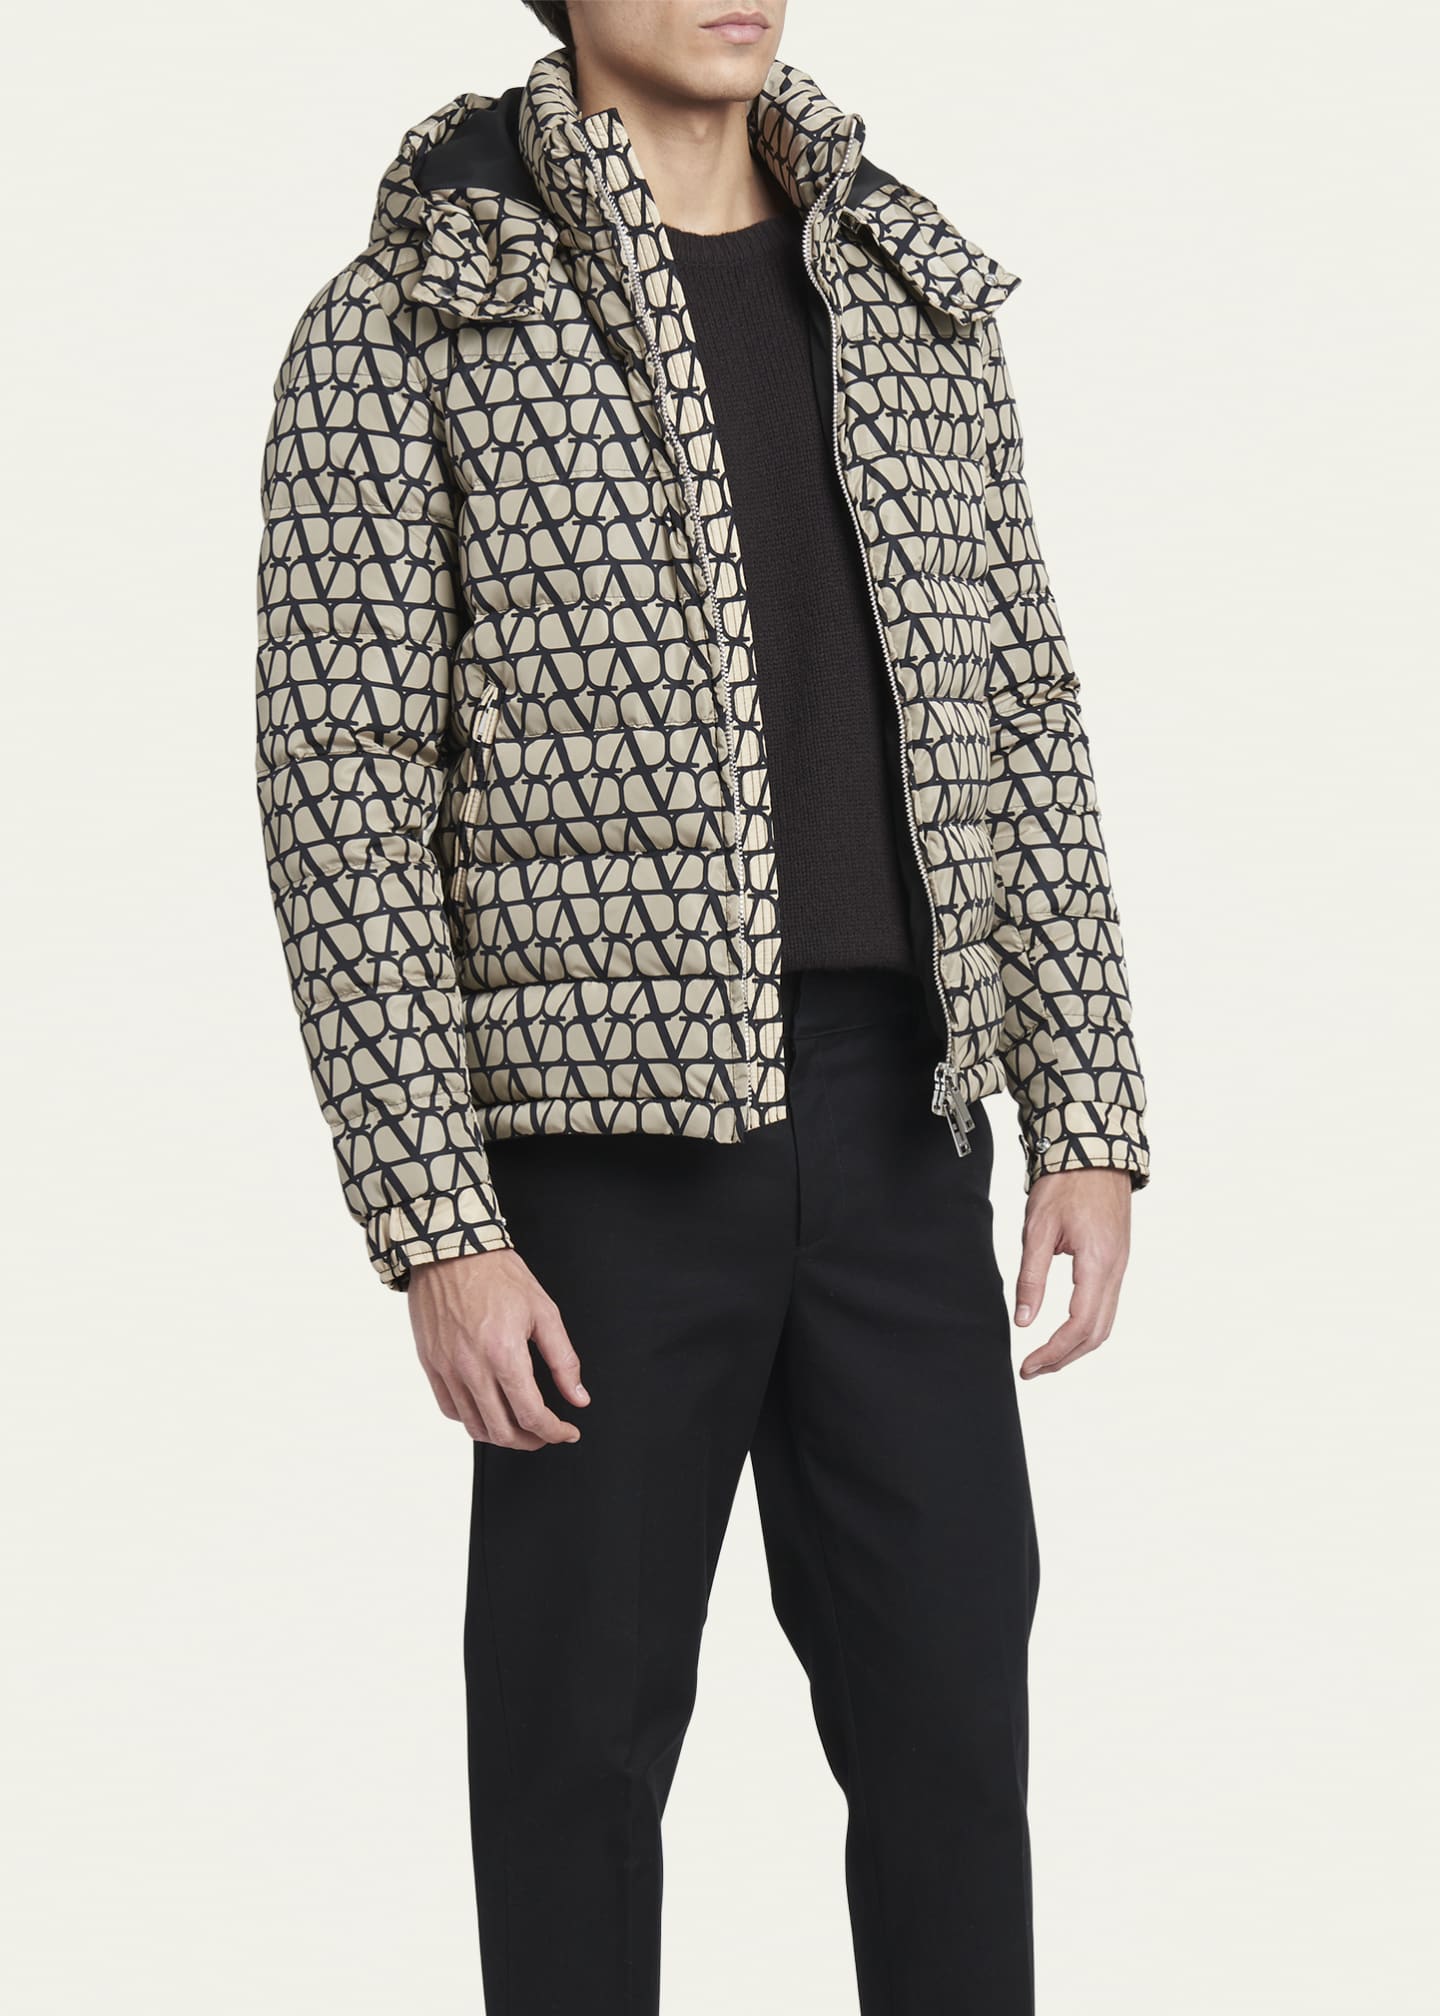 Valentino Garavani Men's Iconography Puffer Jacket - Bergdorf Goodman